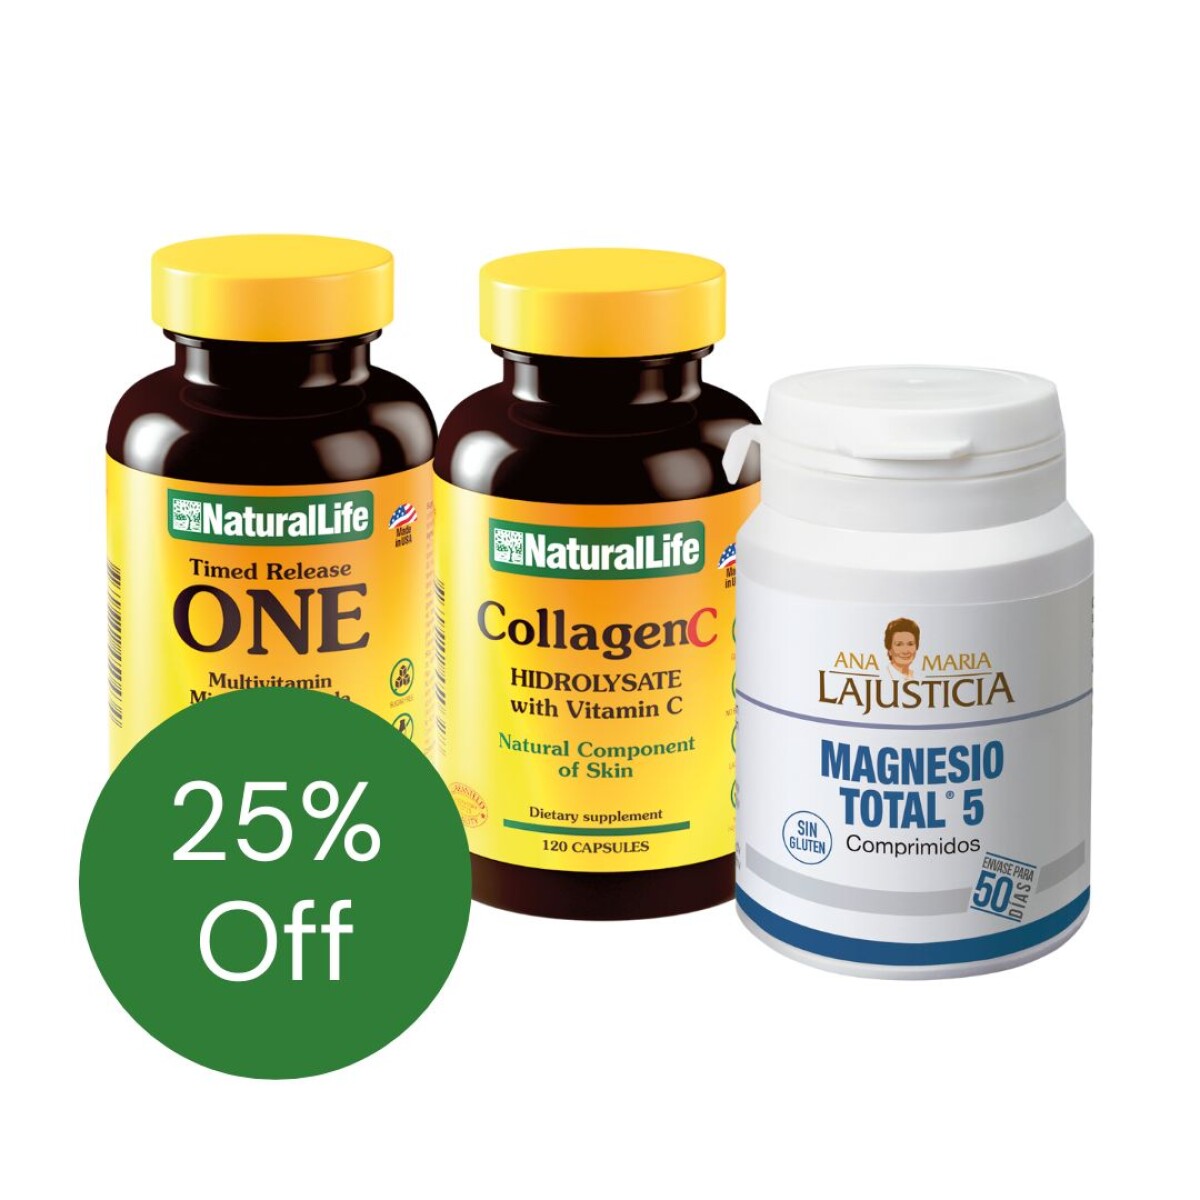 Pack bienestar integral - One + Collagen C + Magnesio Total 5 